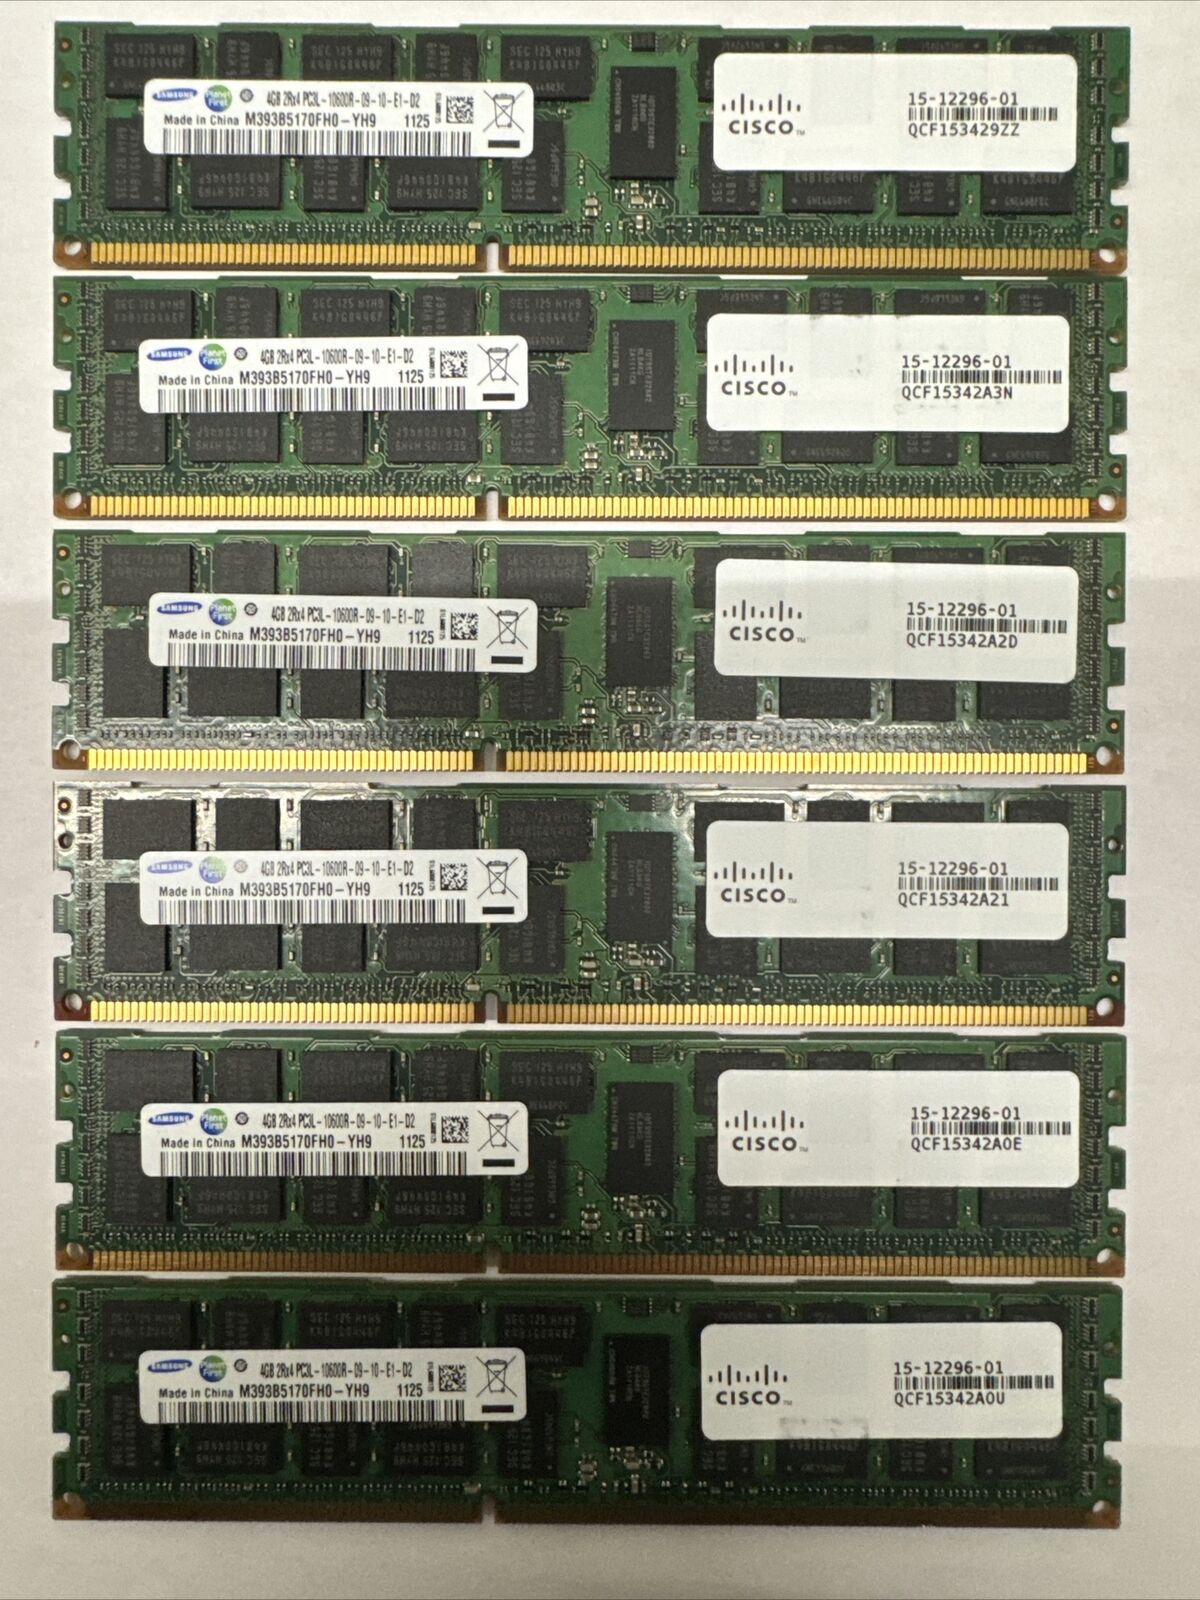 LOT OF 6 Samsung M393B5170FH0-CH9 4GB 2Rx4 PC3-10600R DDR3 Registered Server RAM